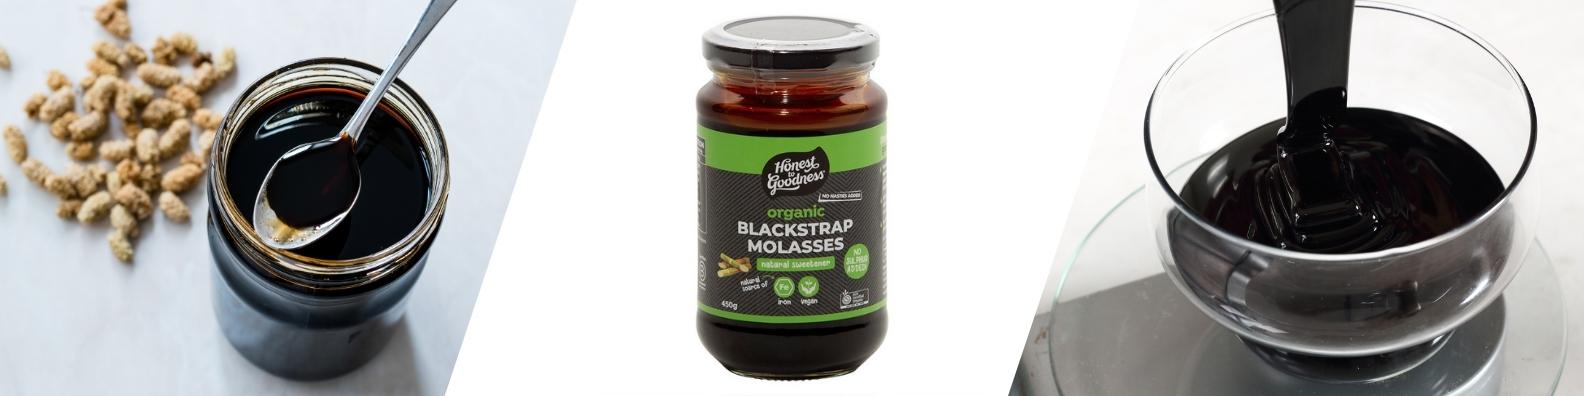 Blackstrap molasses - Blog Header